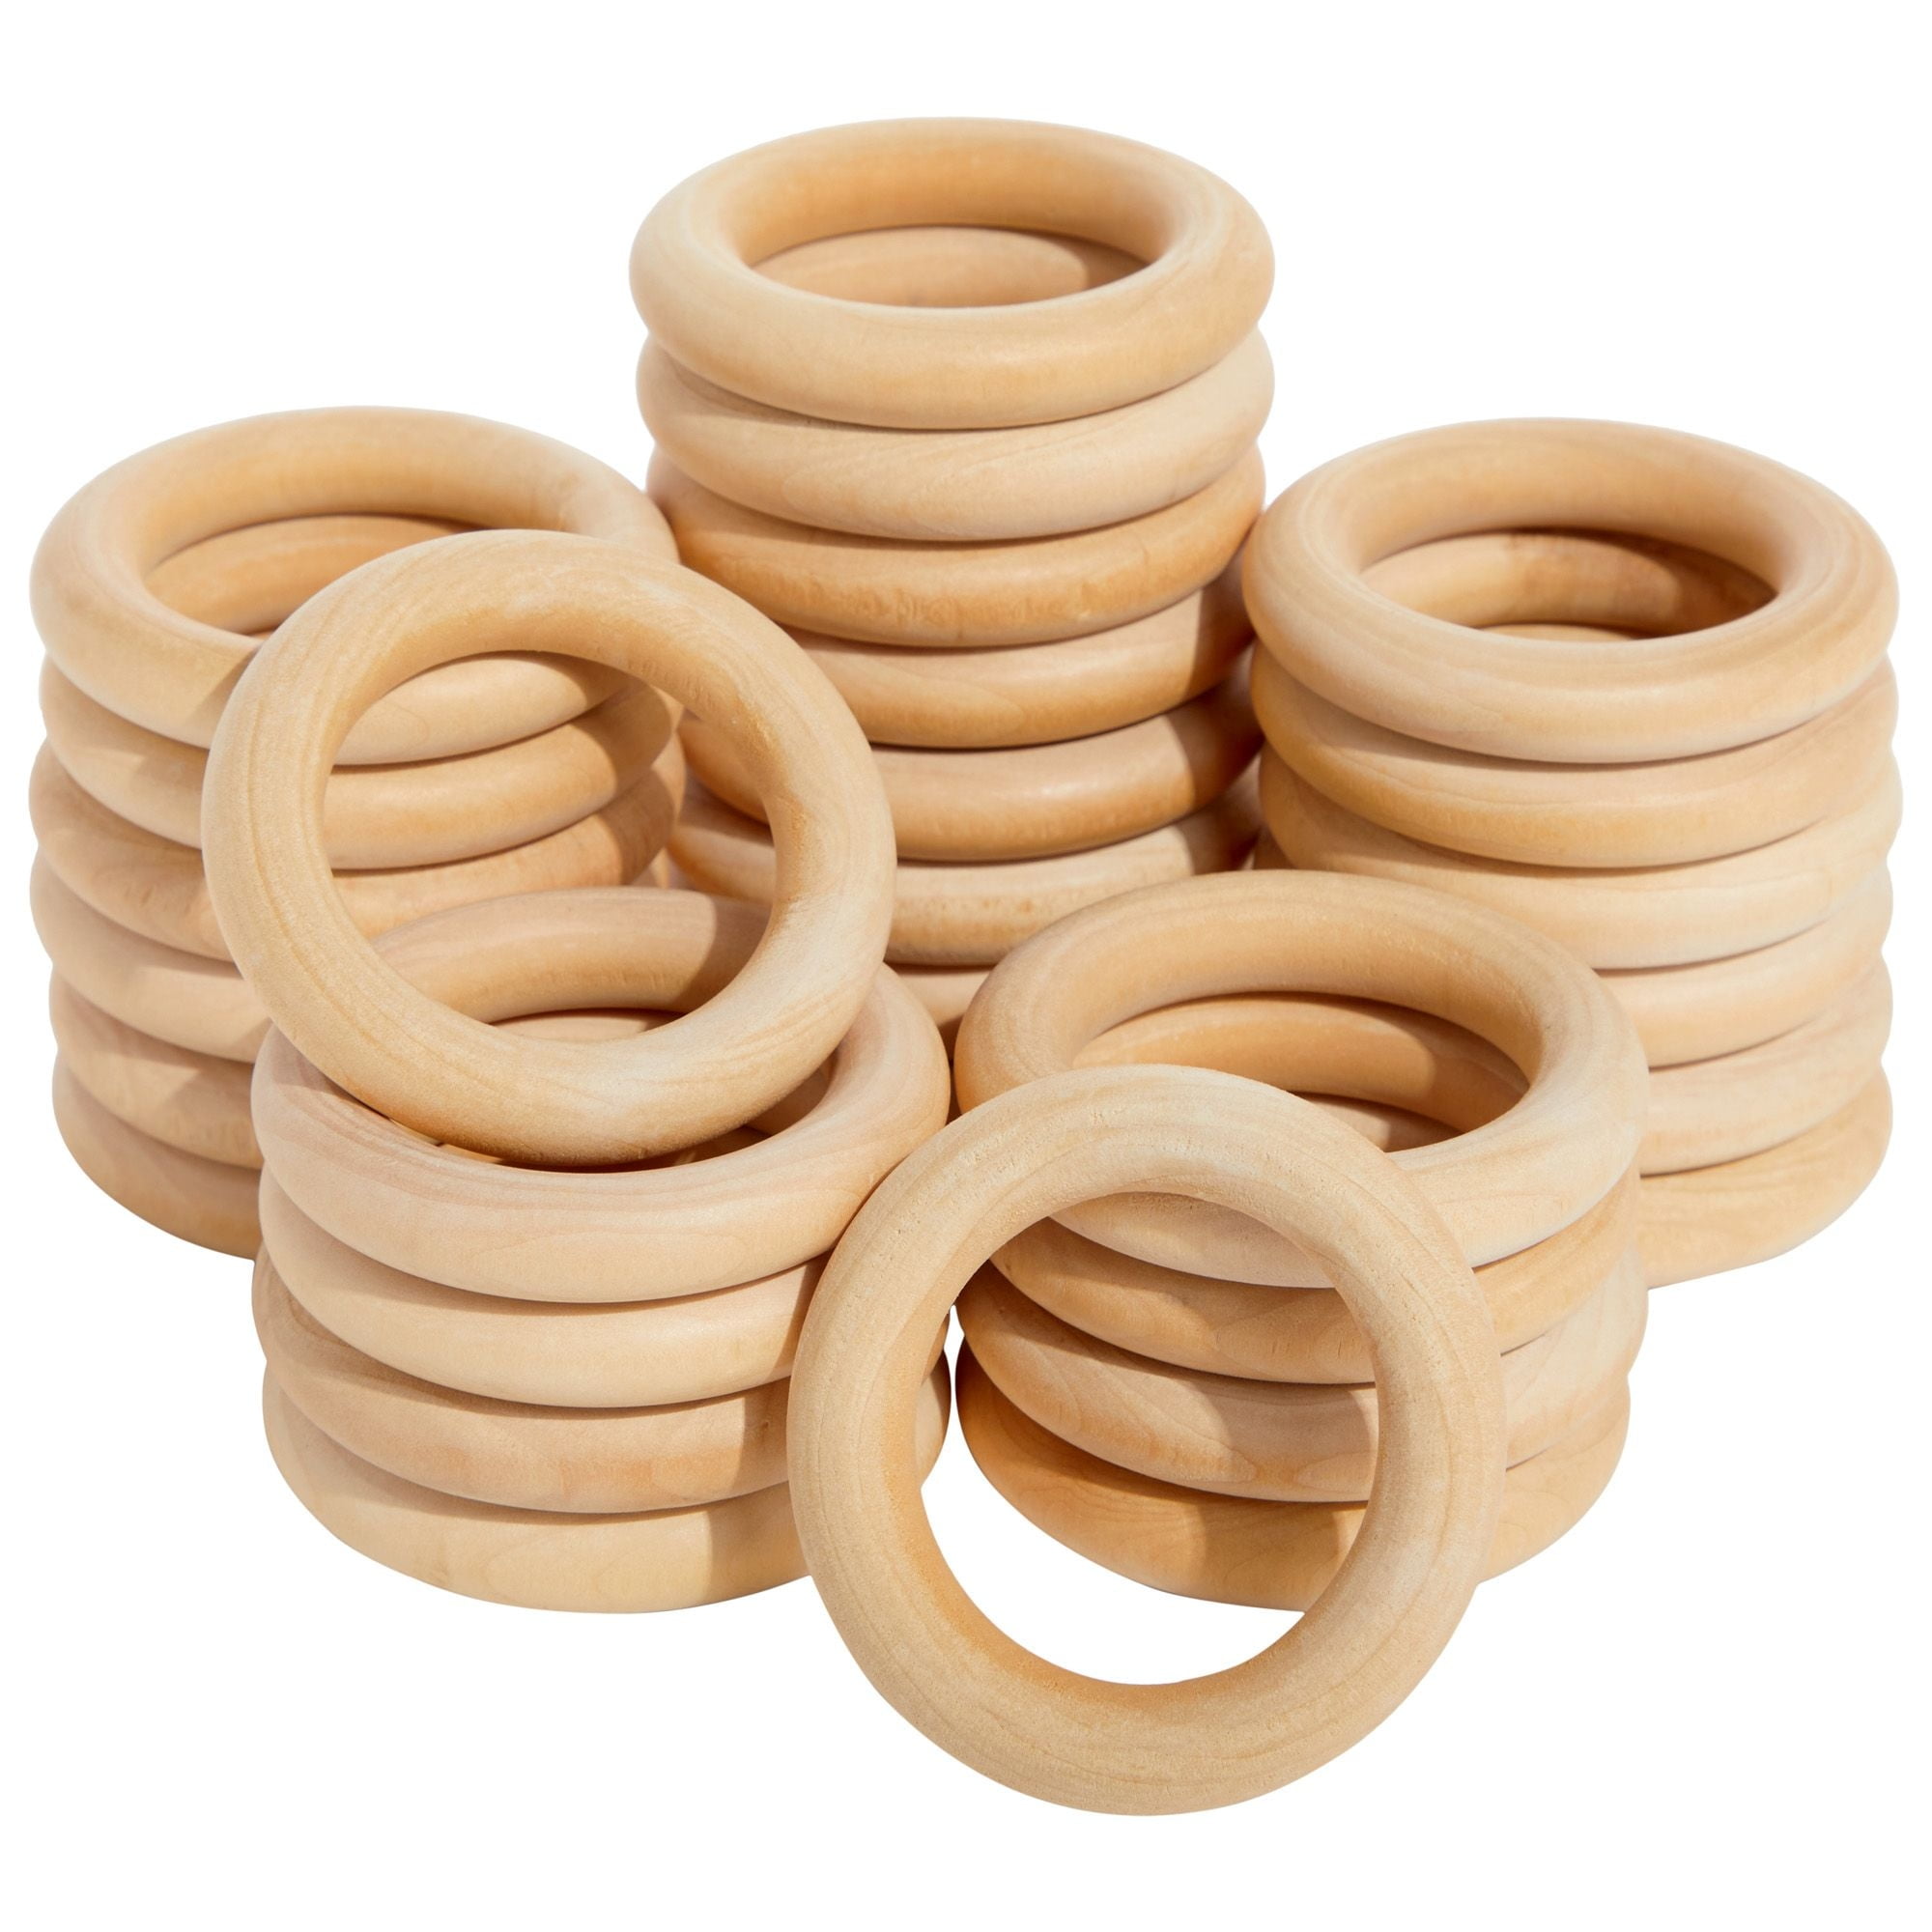 Macrame Wooden Rings (14 Sizes), Natural Wood / 80mm 4pcs